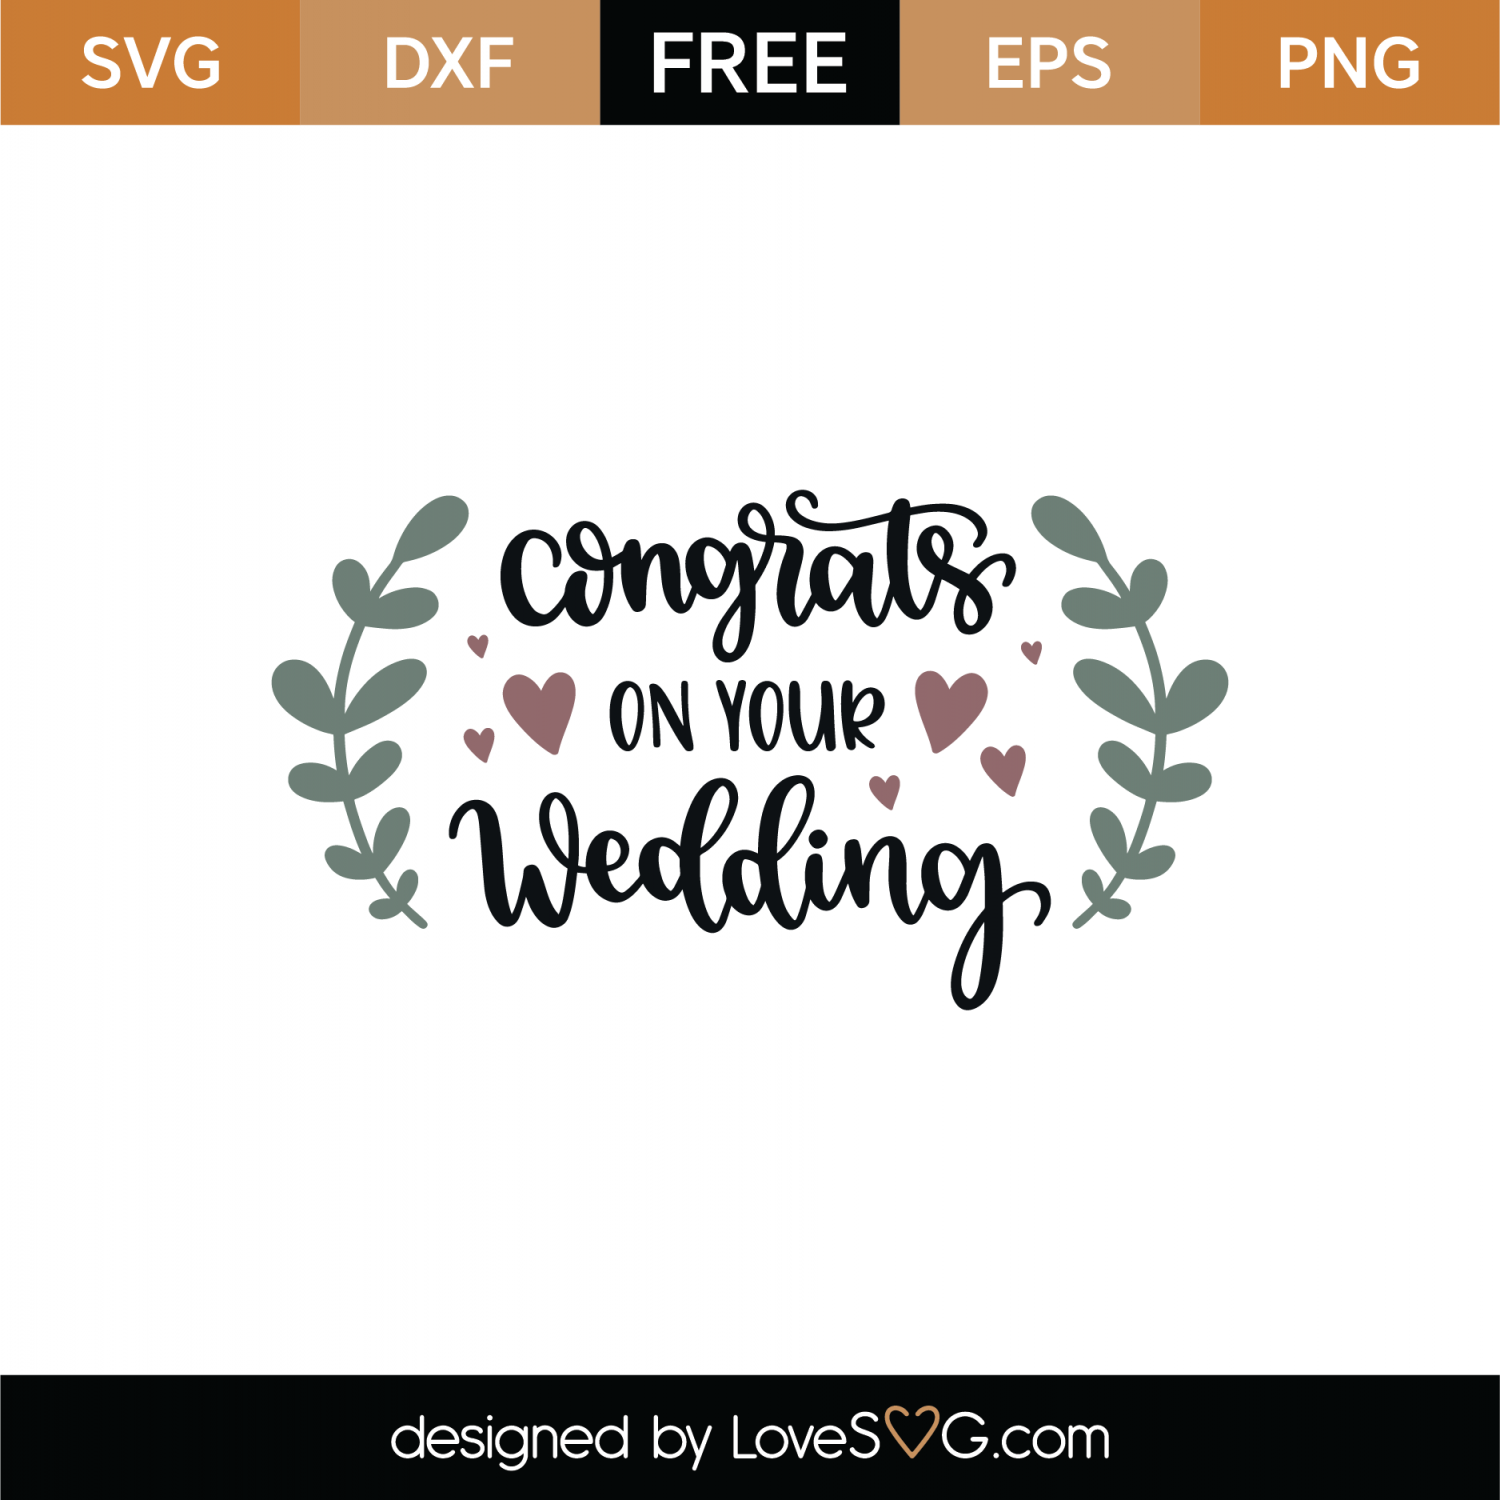 Download Free Congrats On Your Wedding SVG Cut File | Lovesvg.com